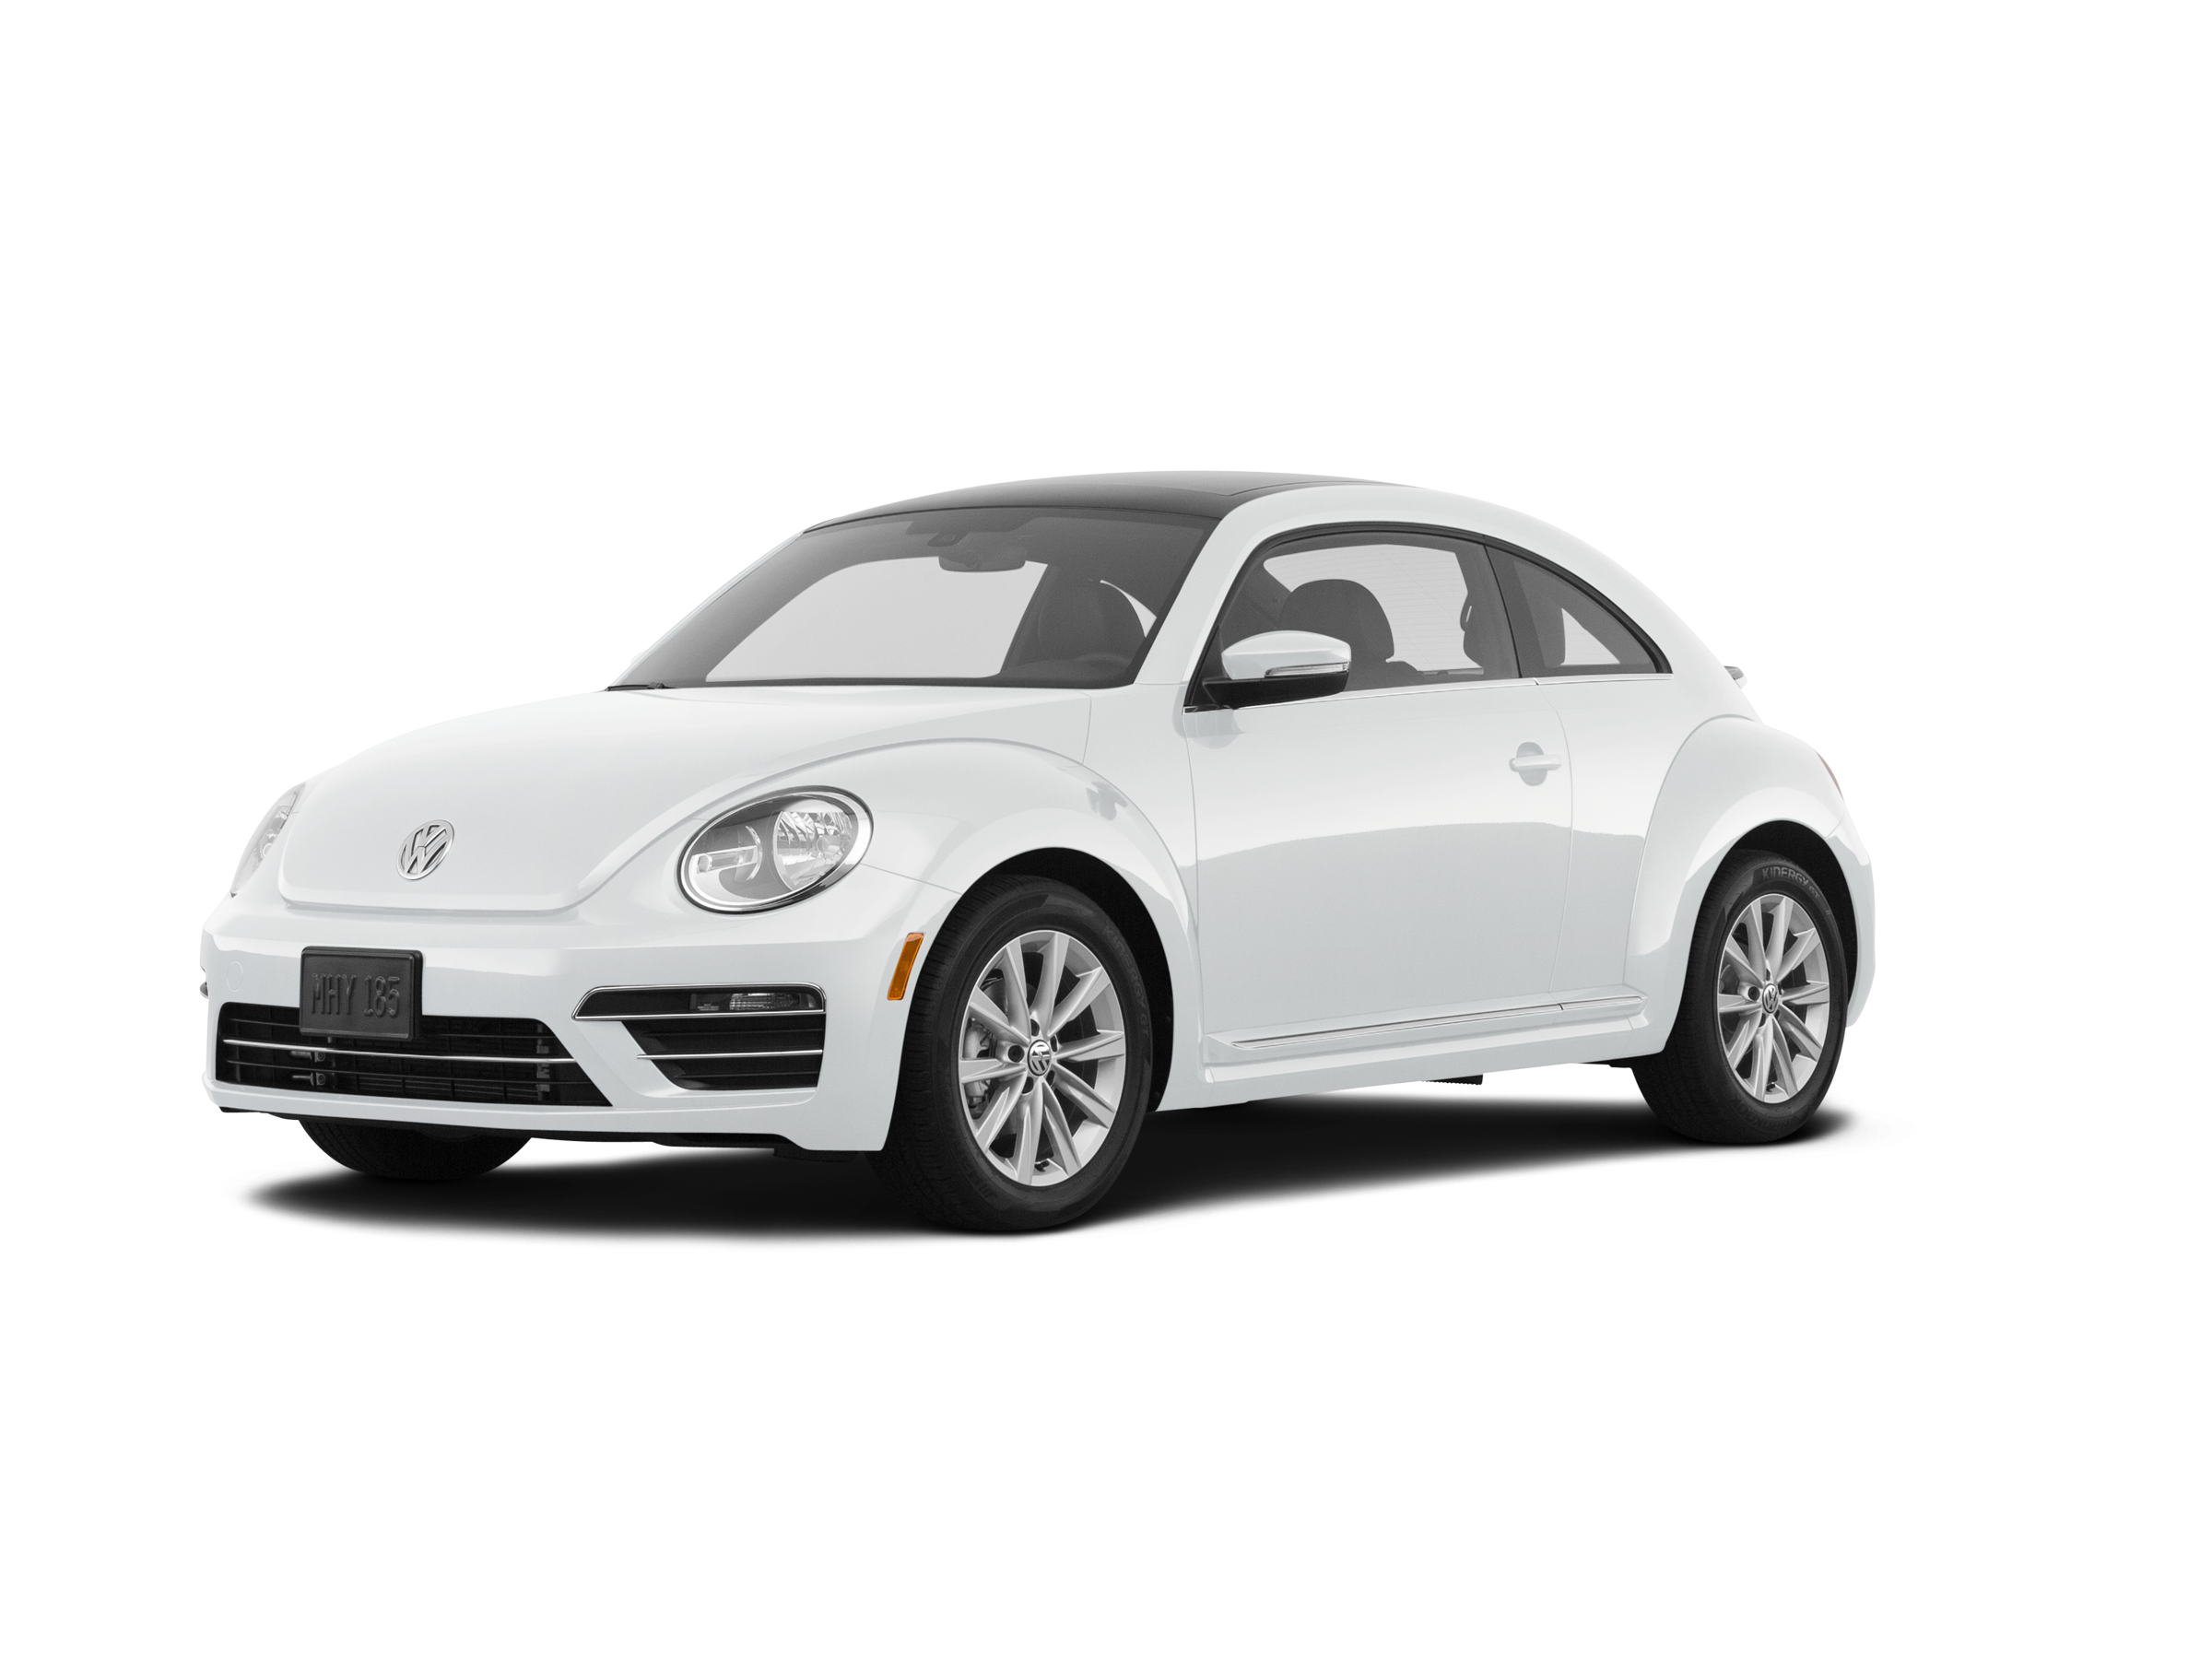 Zündkerzen für VW Beetle günstig bestellen